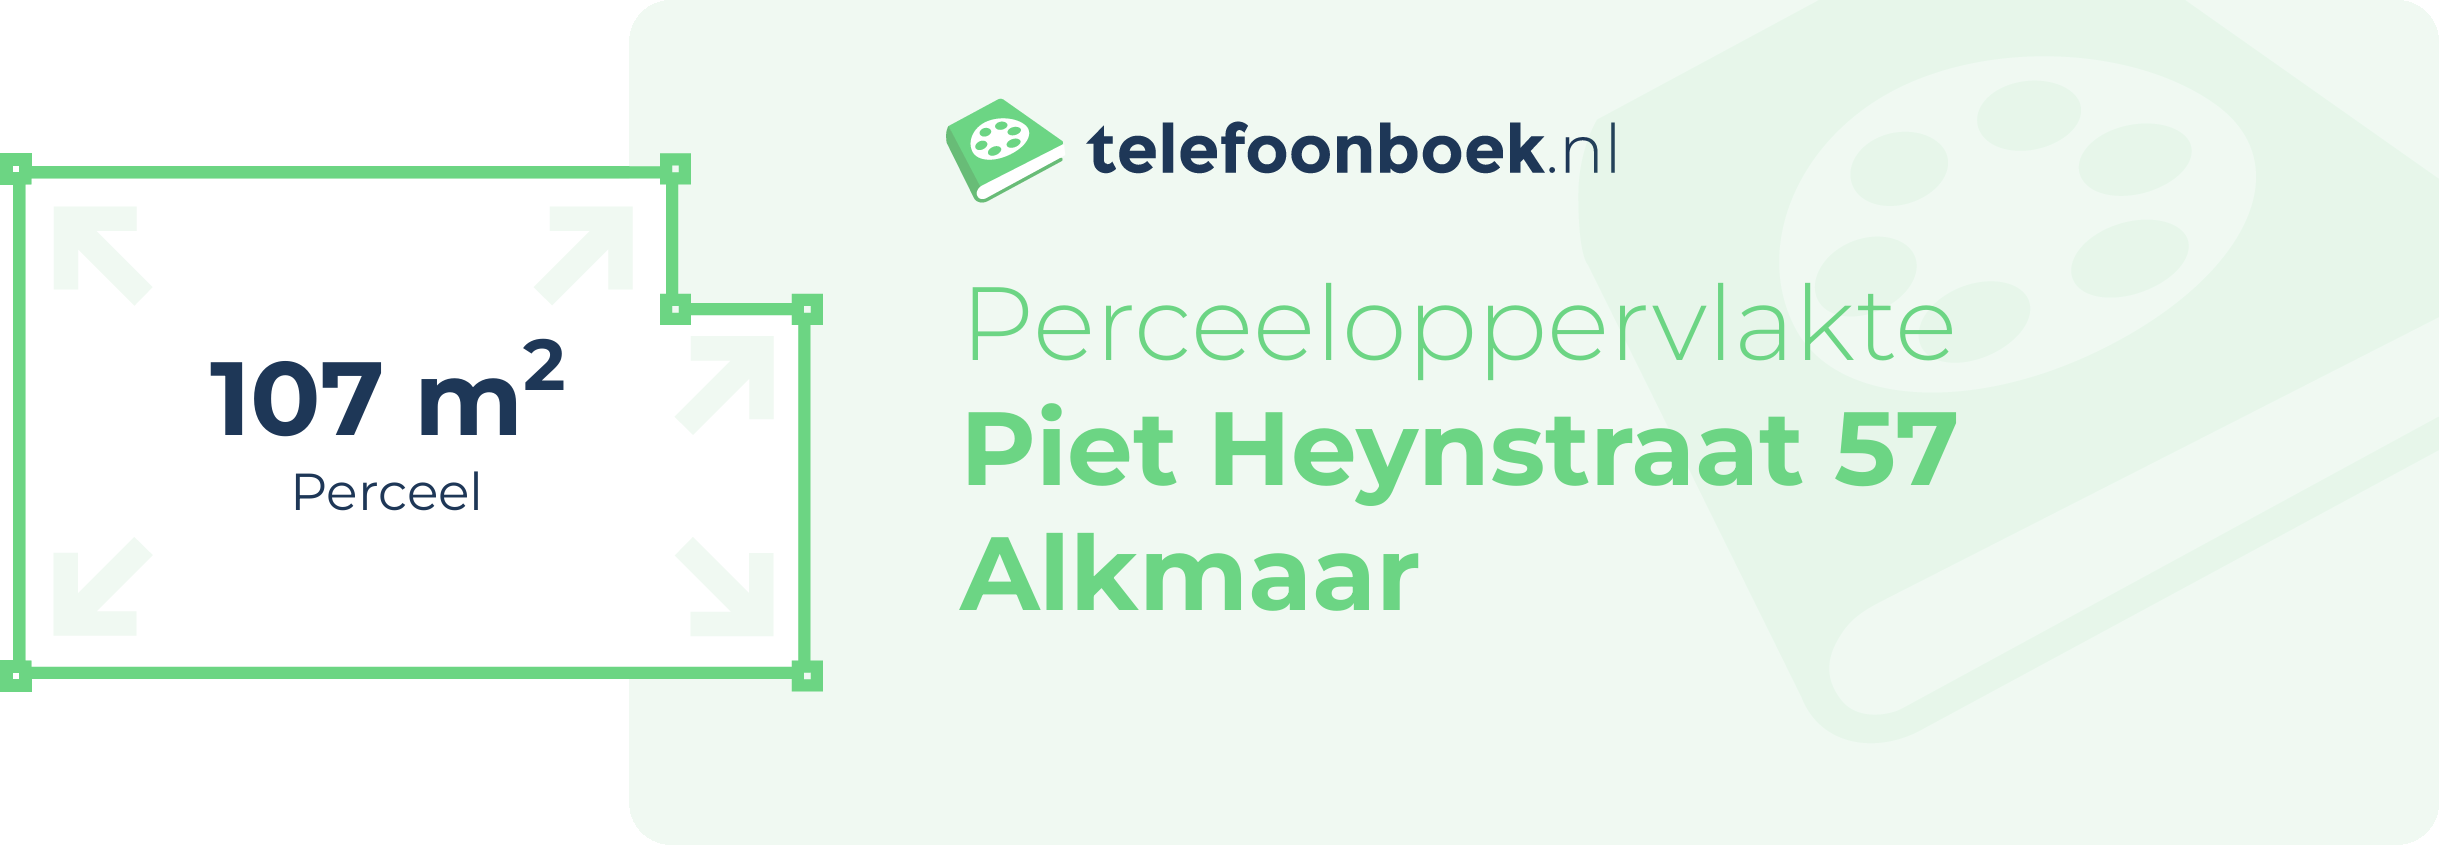 Perceeloppervlakte Piet Heynstraat 57 Alkmaar